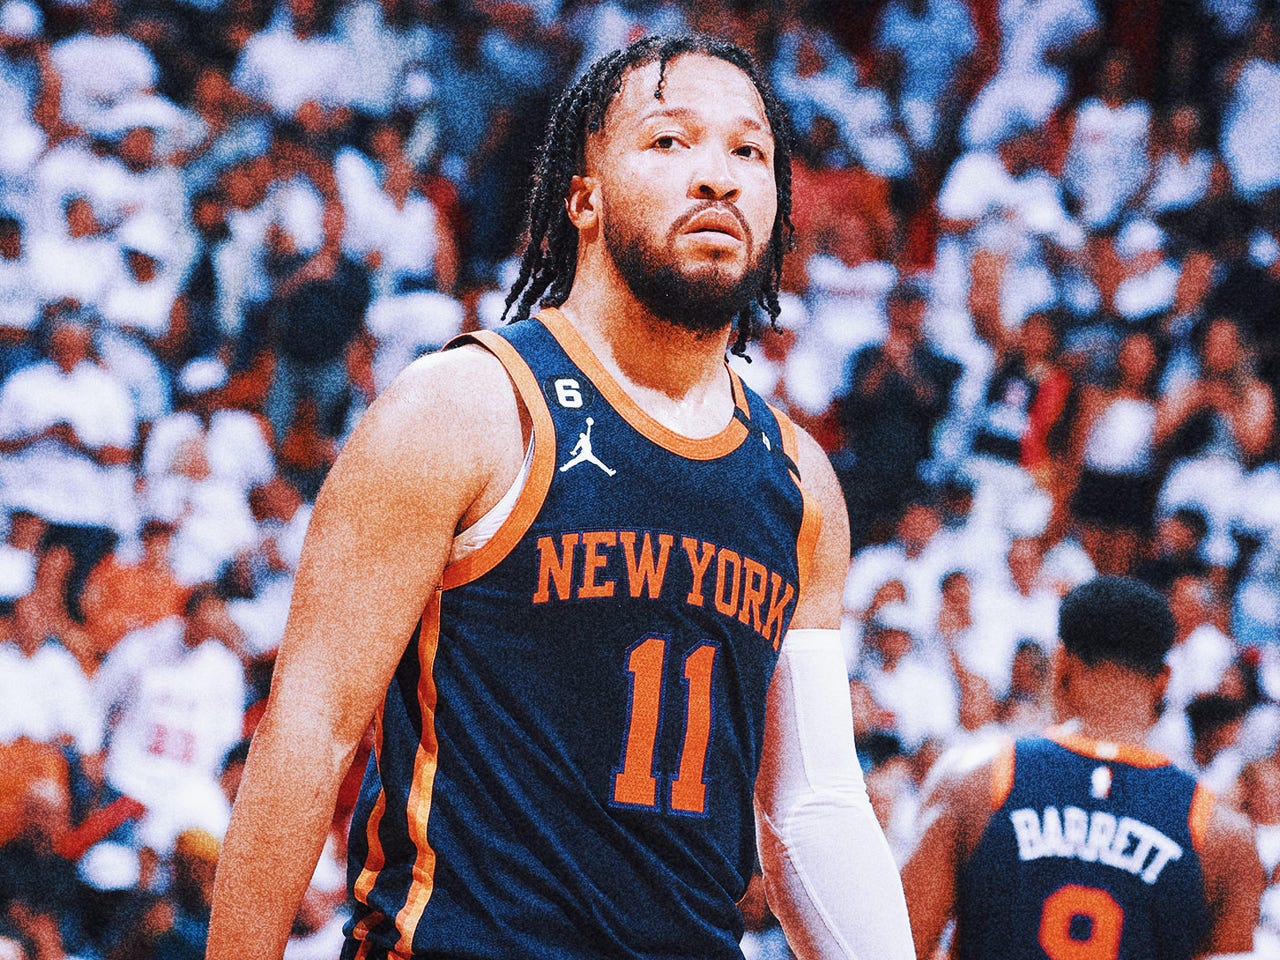 New York Knicks - New York Knicks added a new photo.